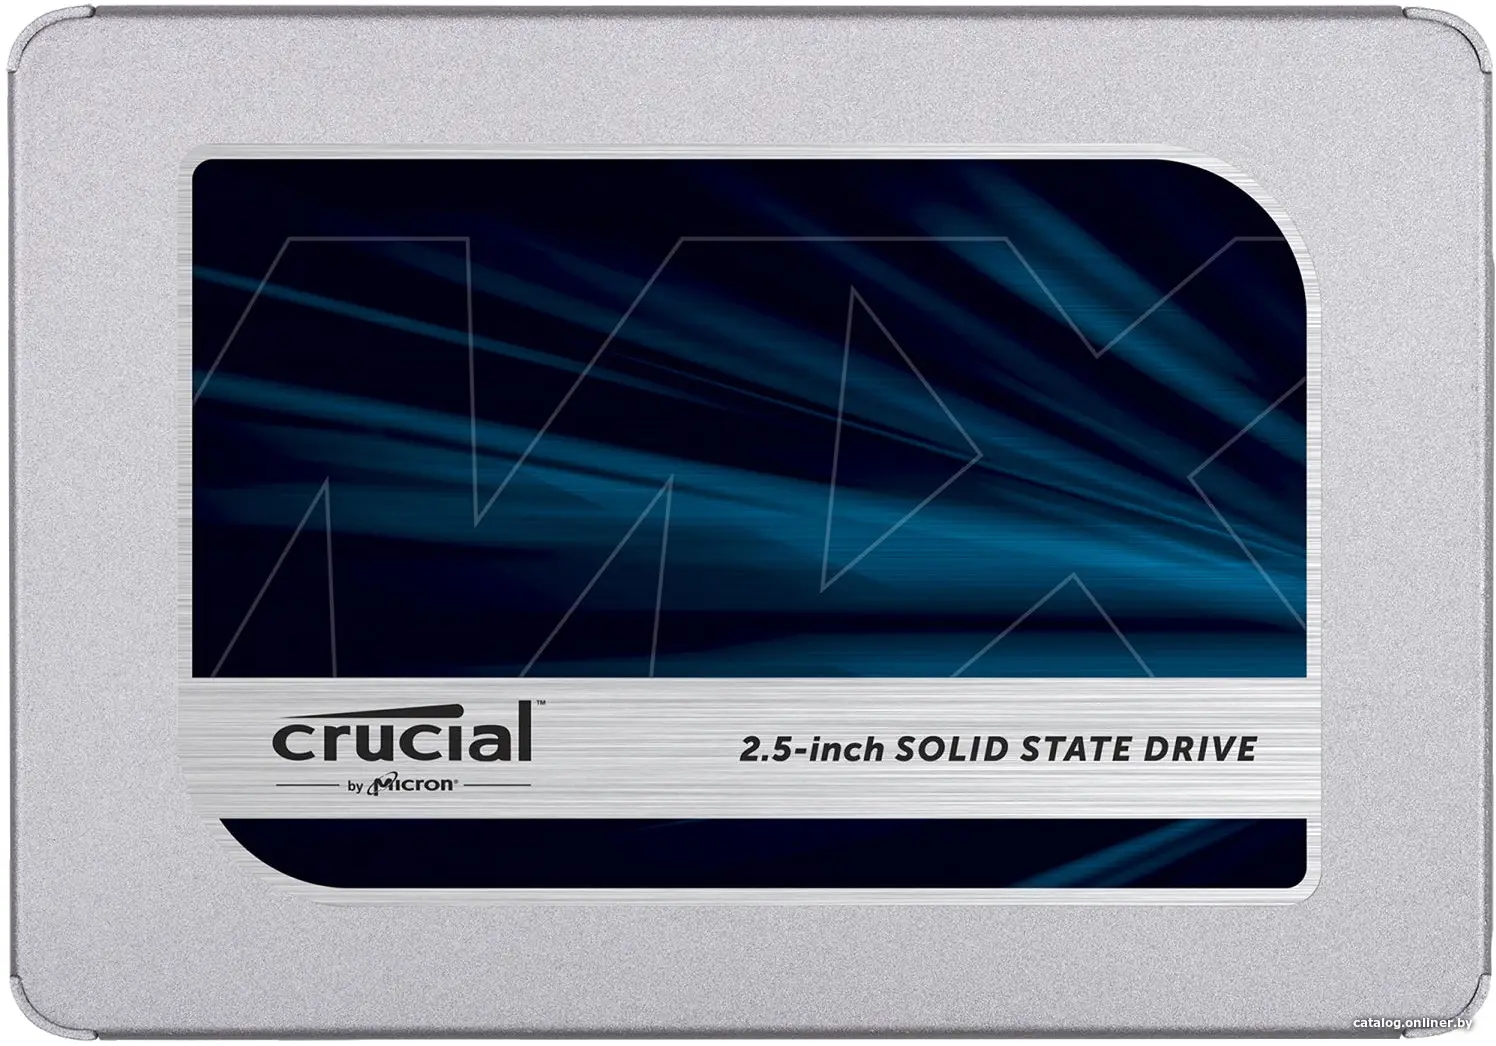 Купить SSD диск Crucial CT4000MX500SSD1, цена, опт и розница